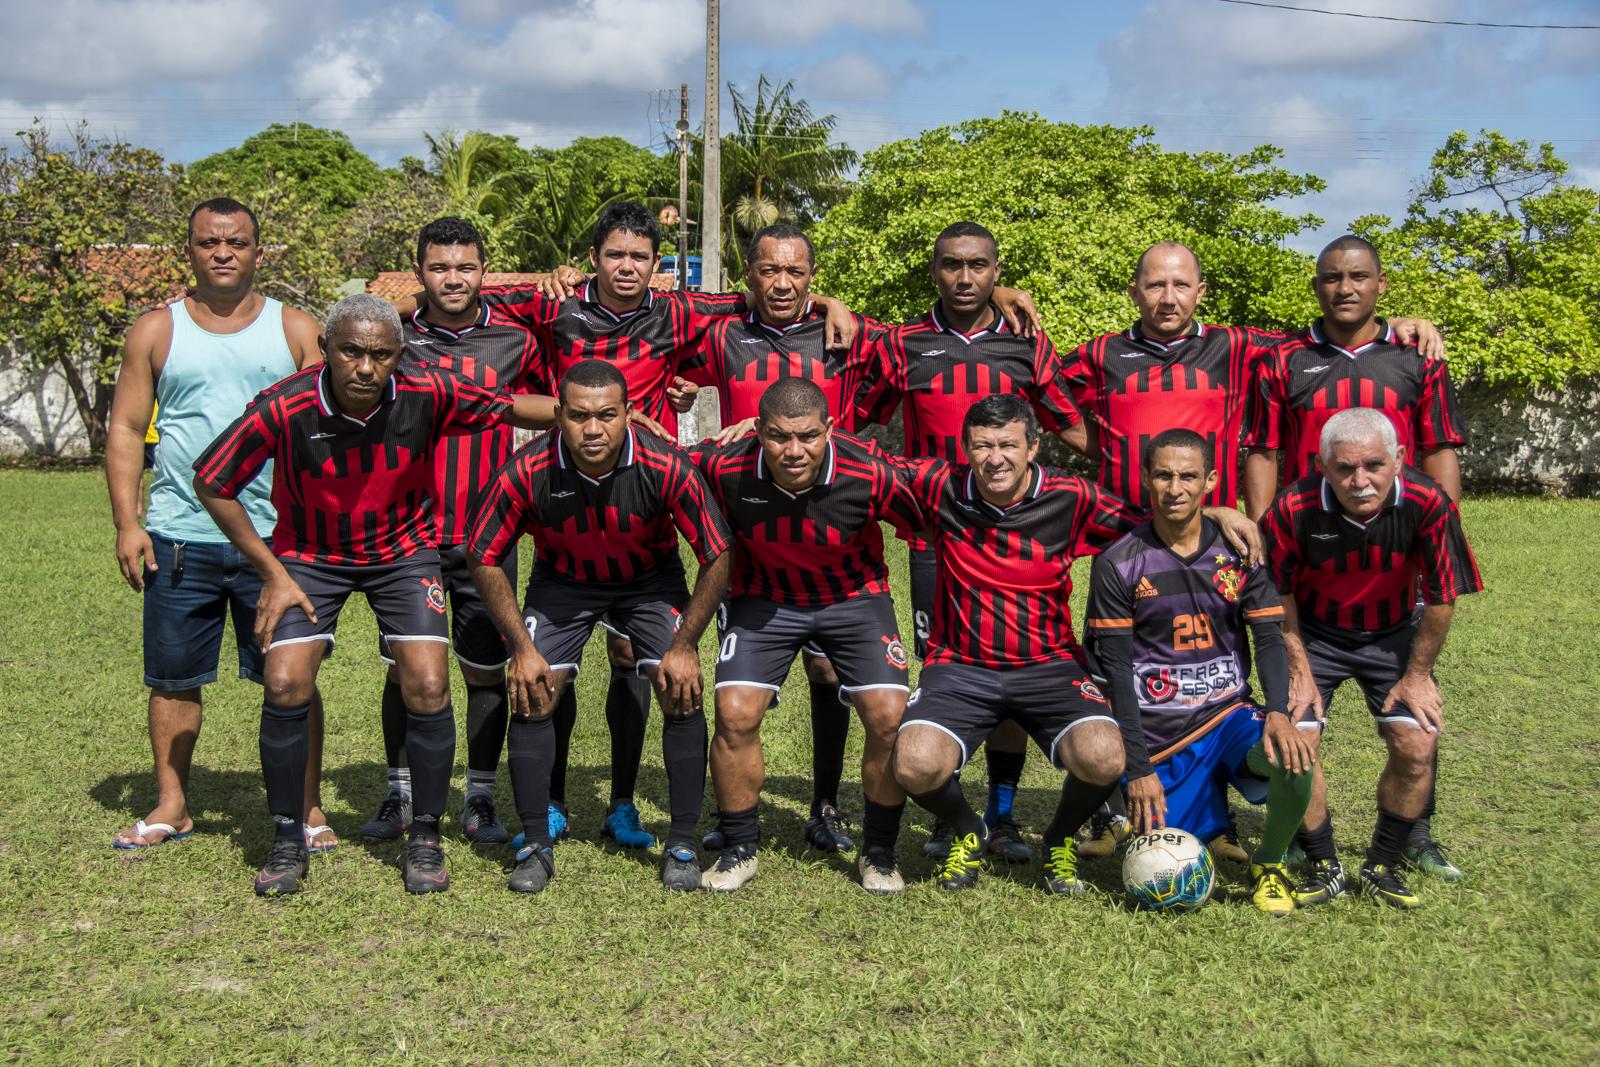 Servidores da Casa Civil vencem Copa de Futebol Society promovida pela Assembleia